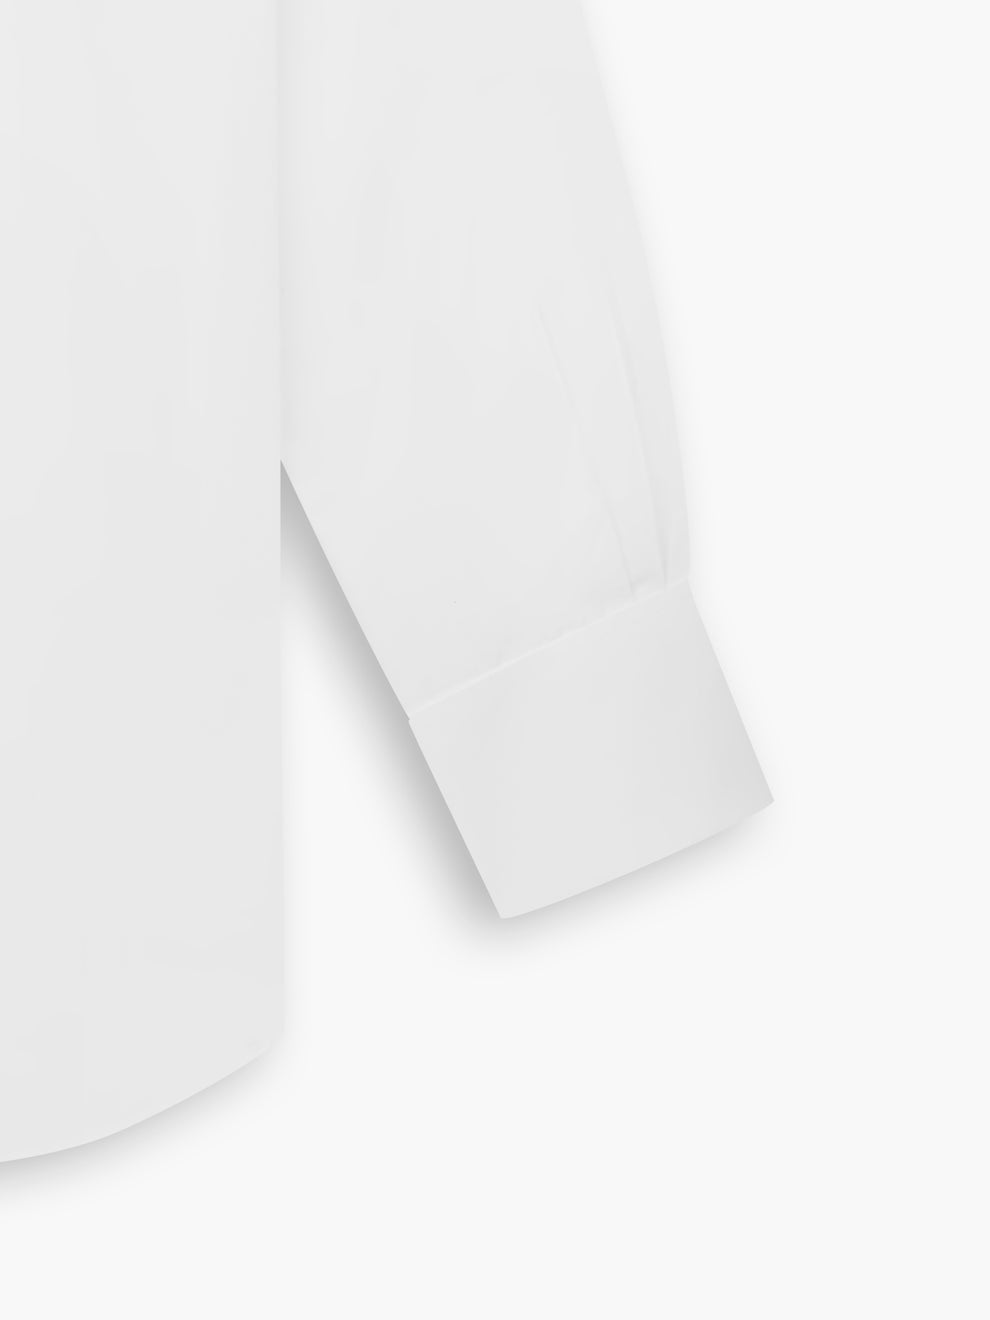 Non-Iron White Poplin Regular Fit Double Cuff Classic Collar Shirt ...